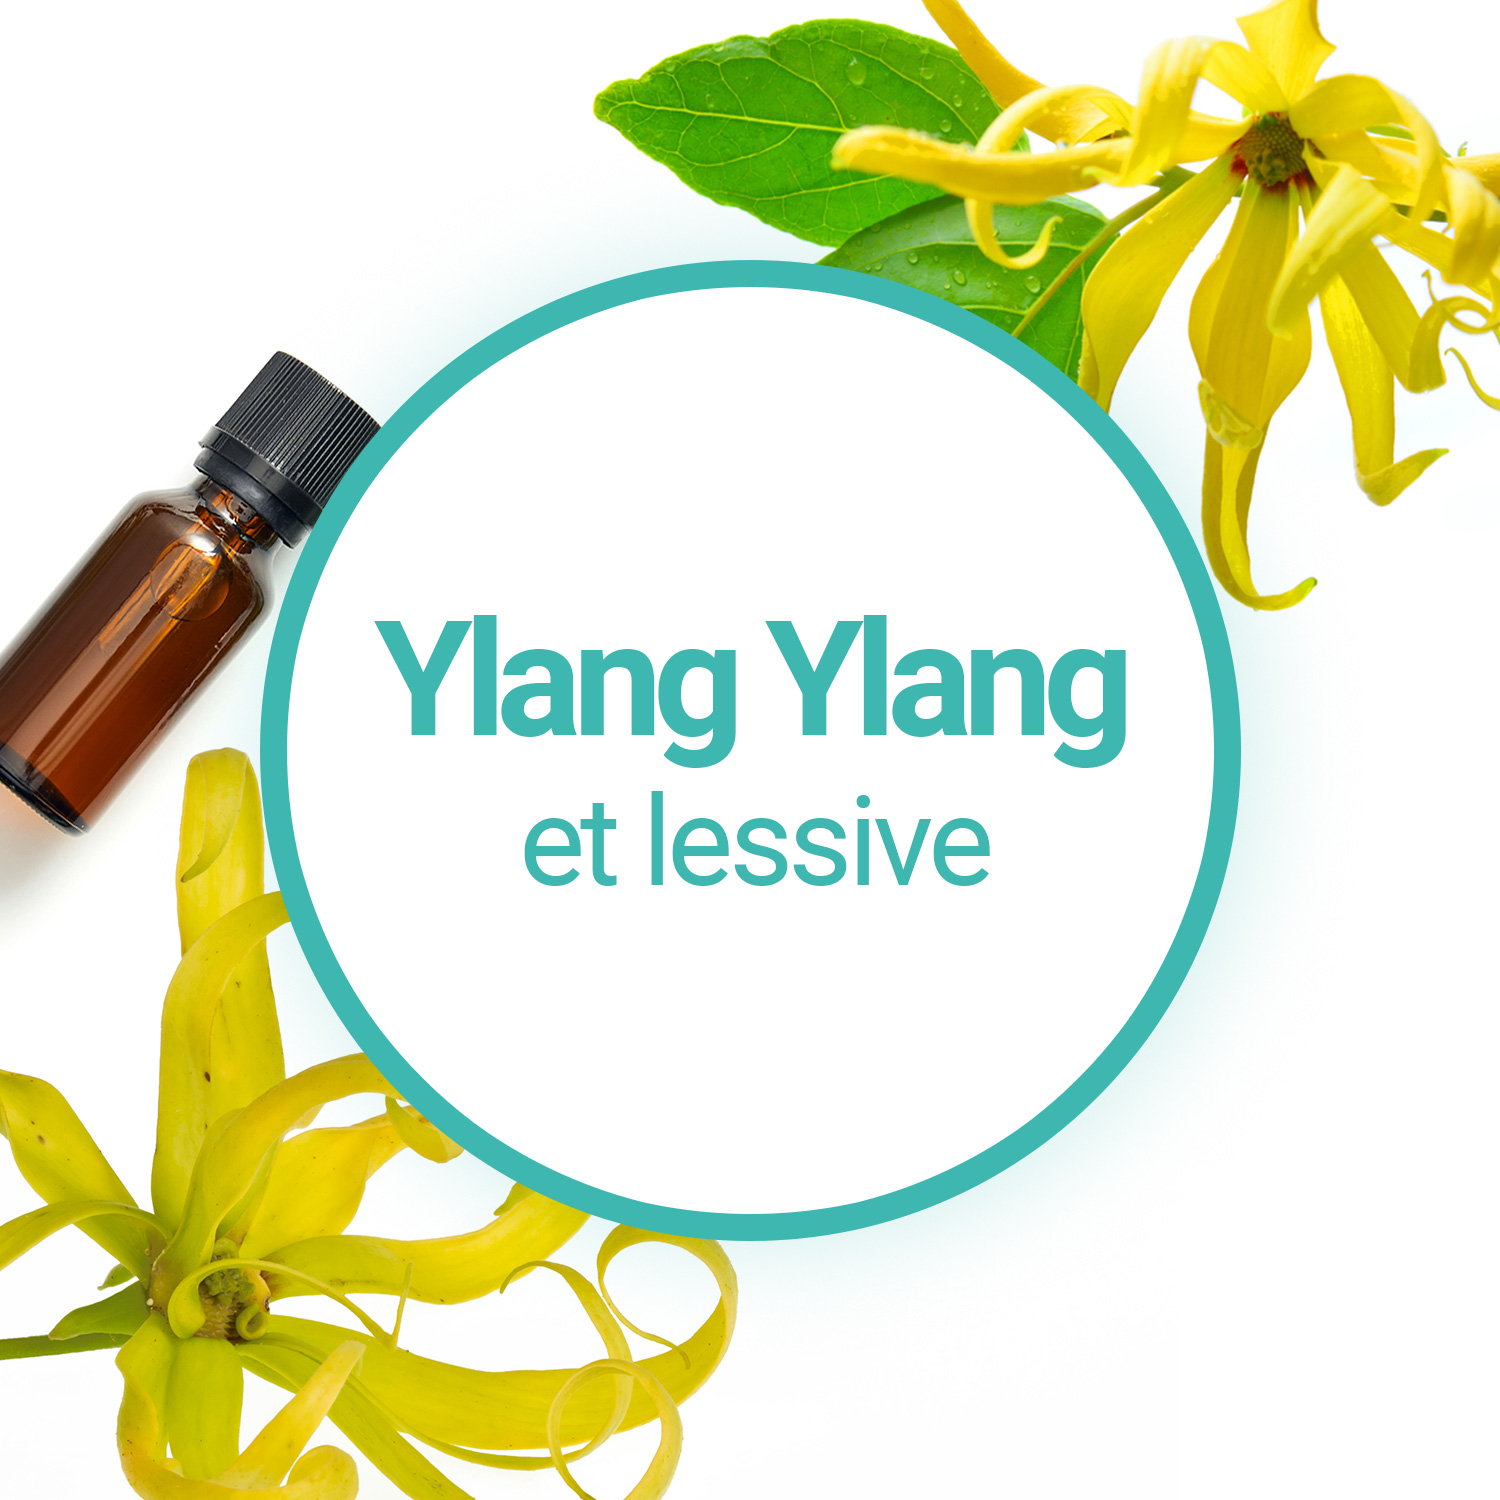 Comment parfumer son linge avec l'huile essentielle d'Ylang Ylang ?